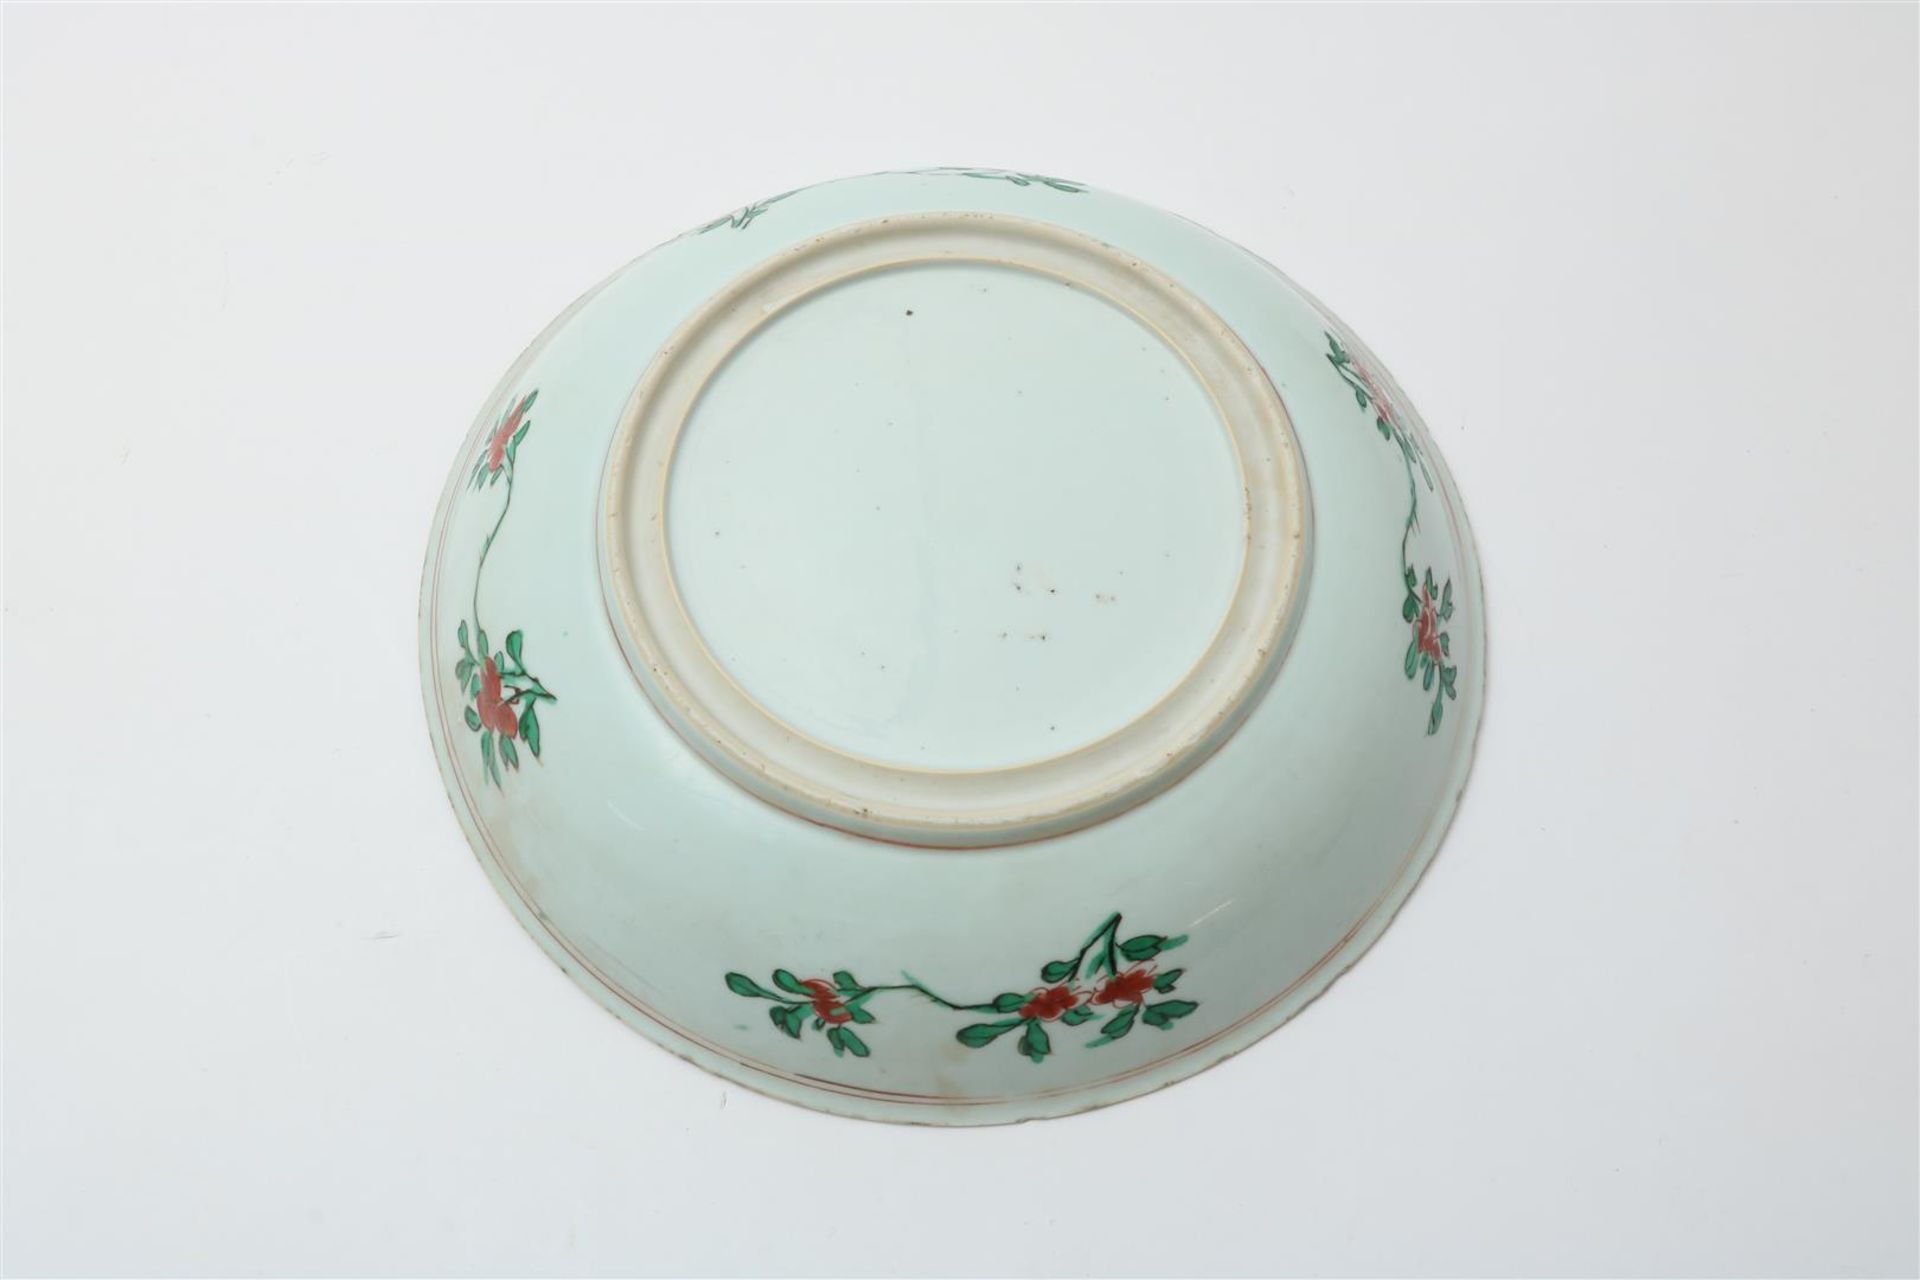 Porcelain Kangxi round dish with Famille Verte decor, diam. 33.5 cm. China, 18th century (with - Image 4 of 6